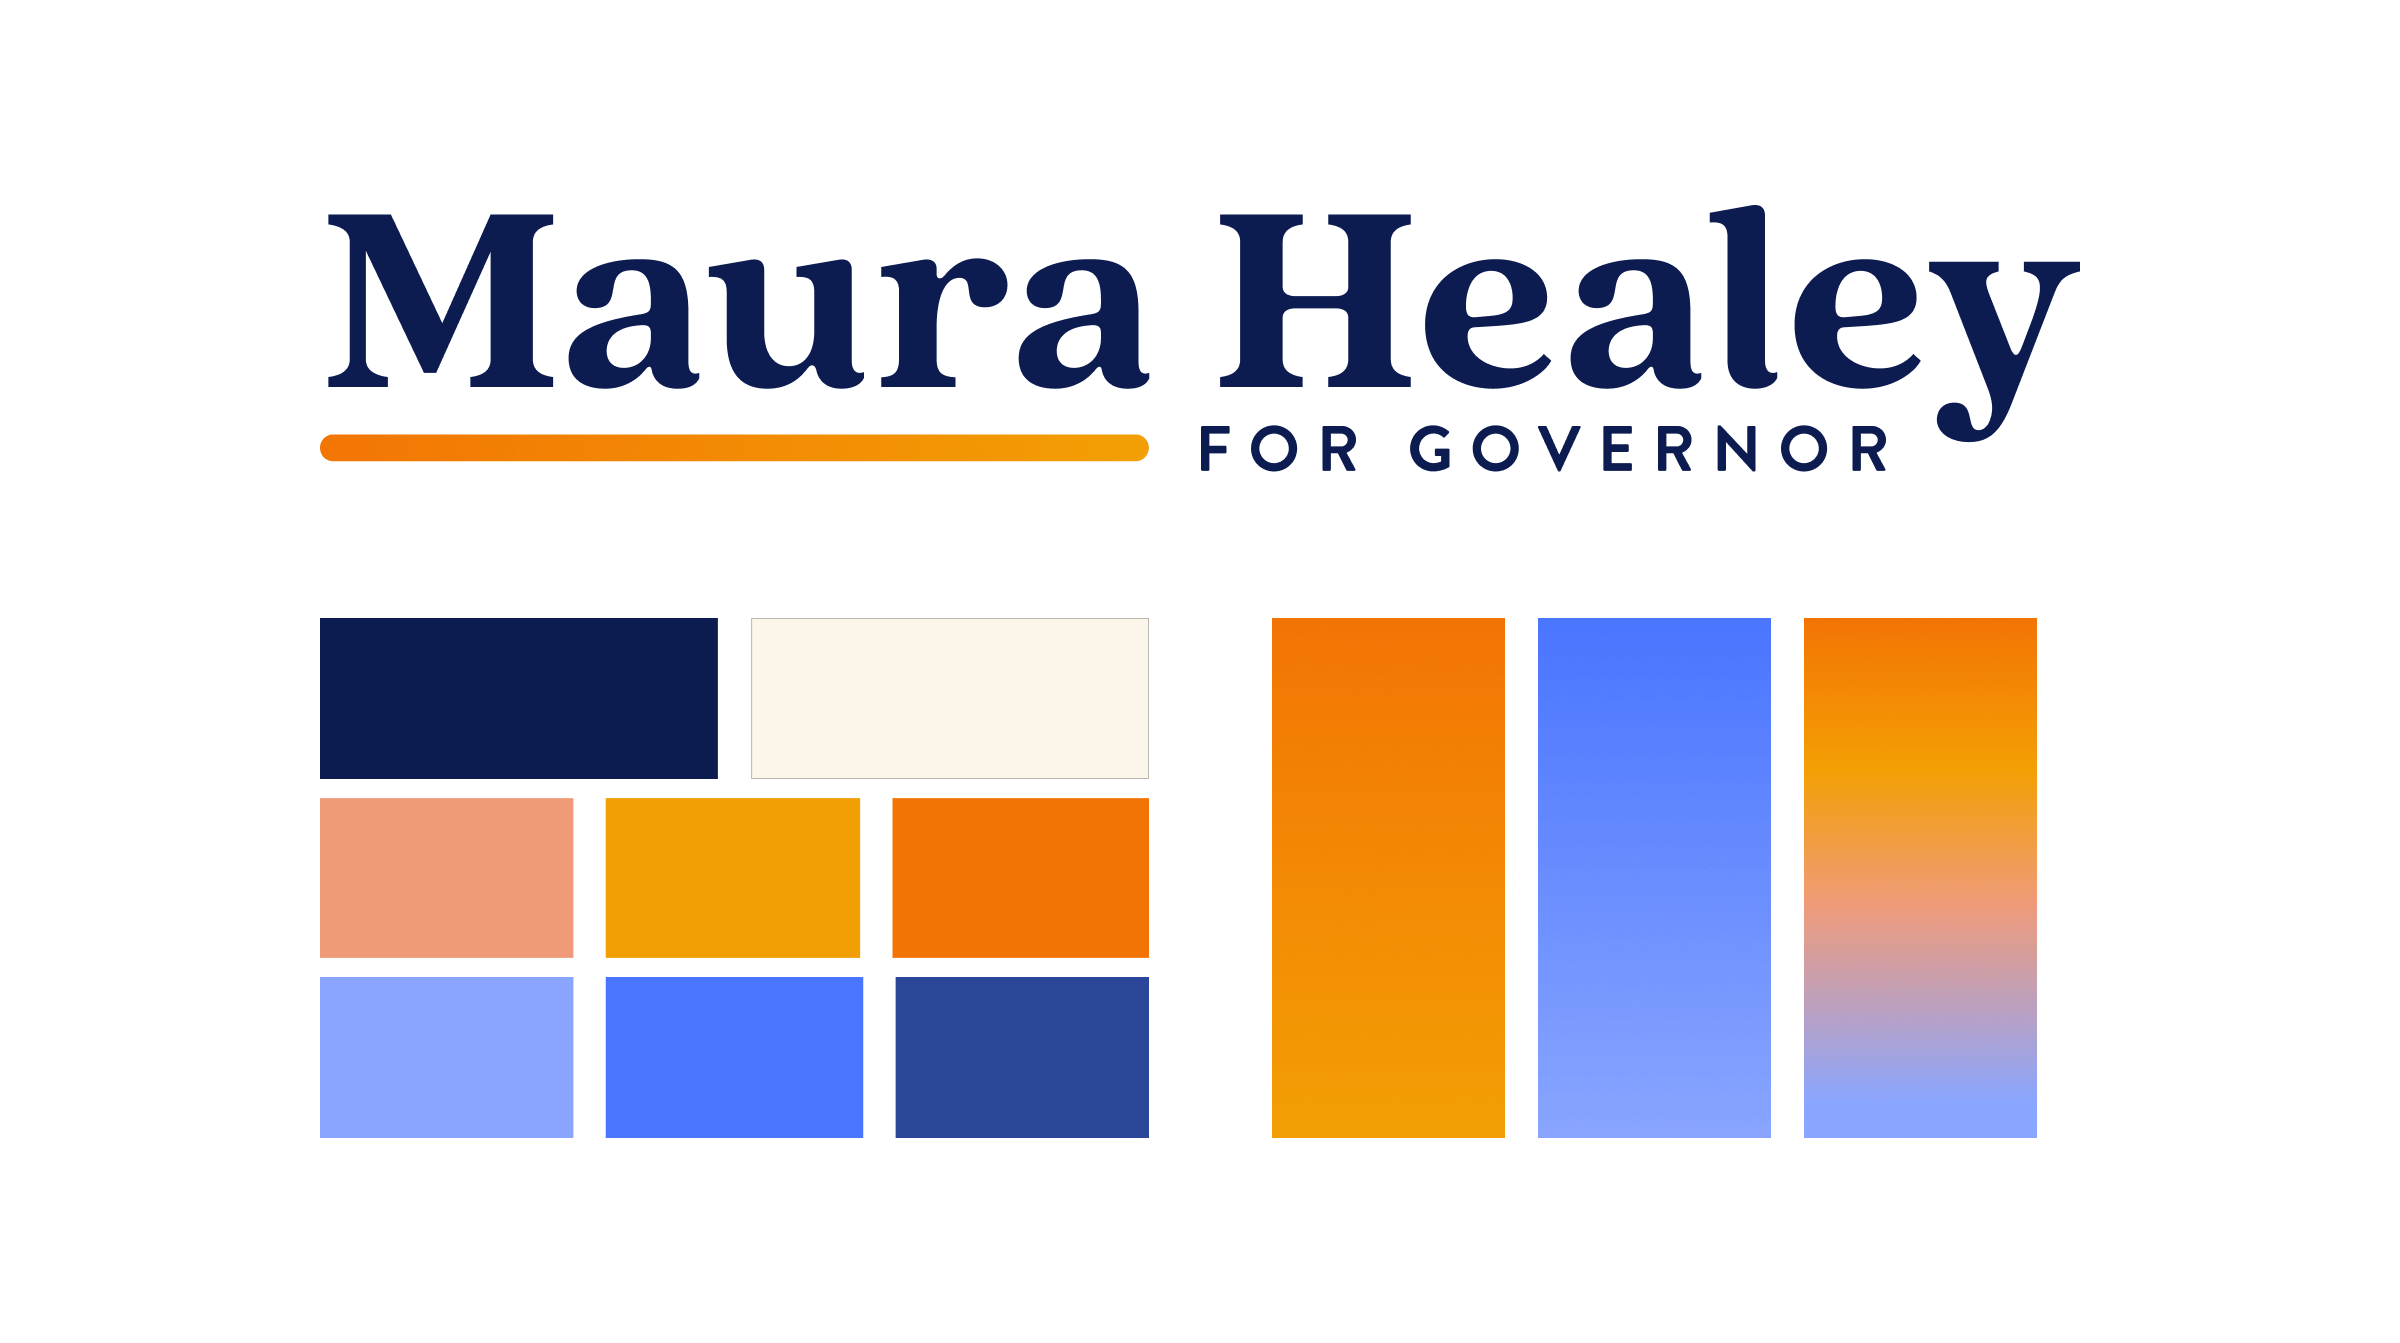 Maura Healey for Governor final branding